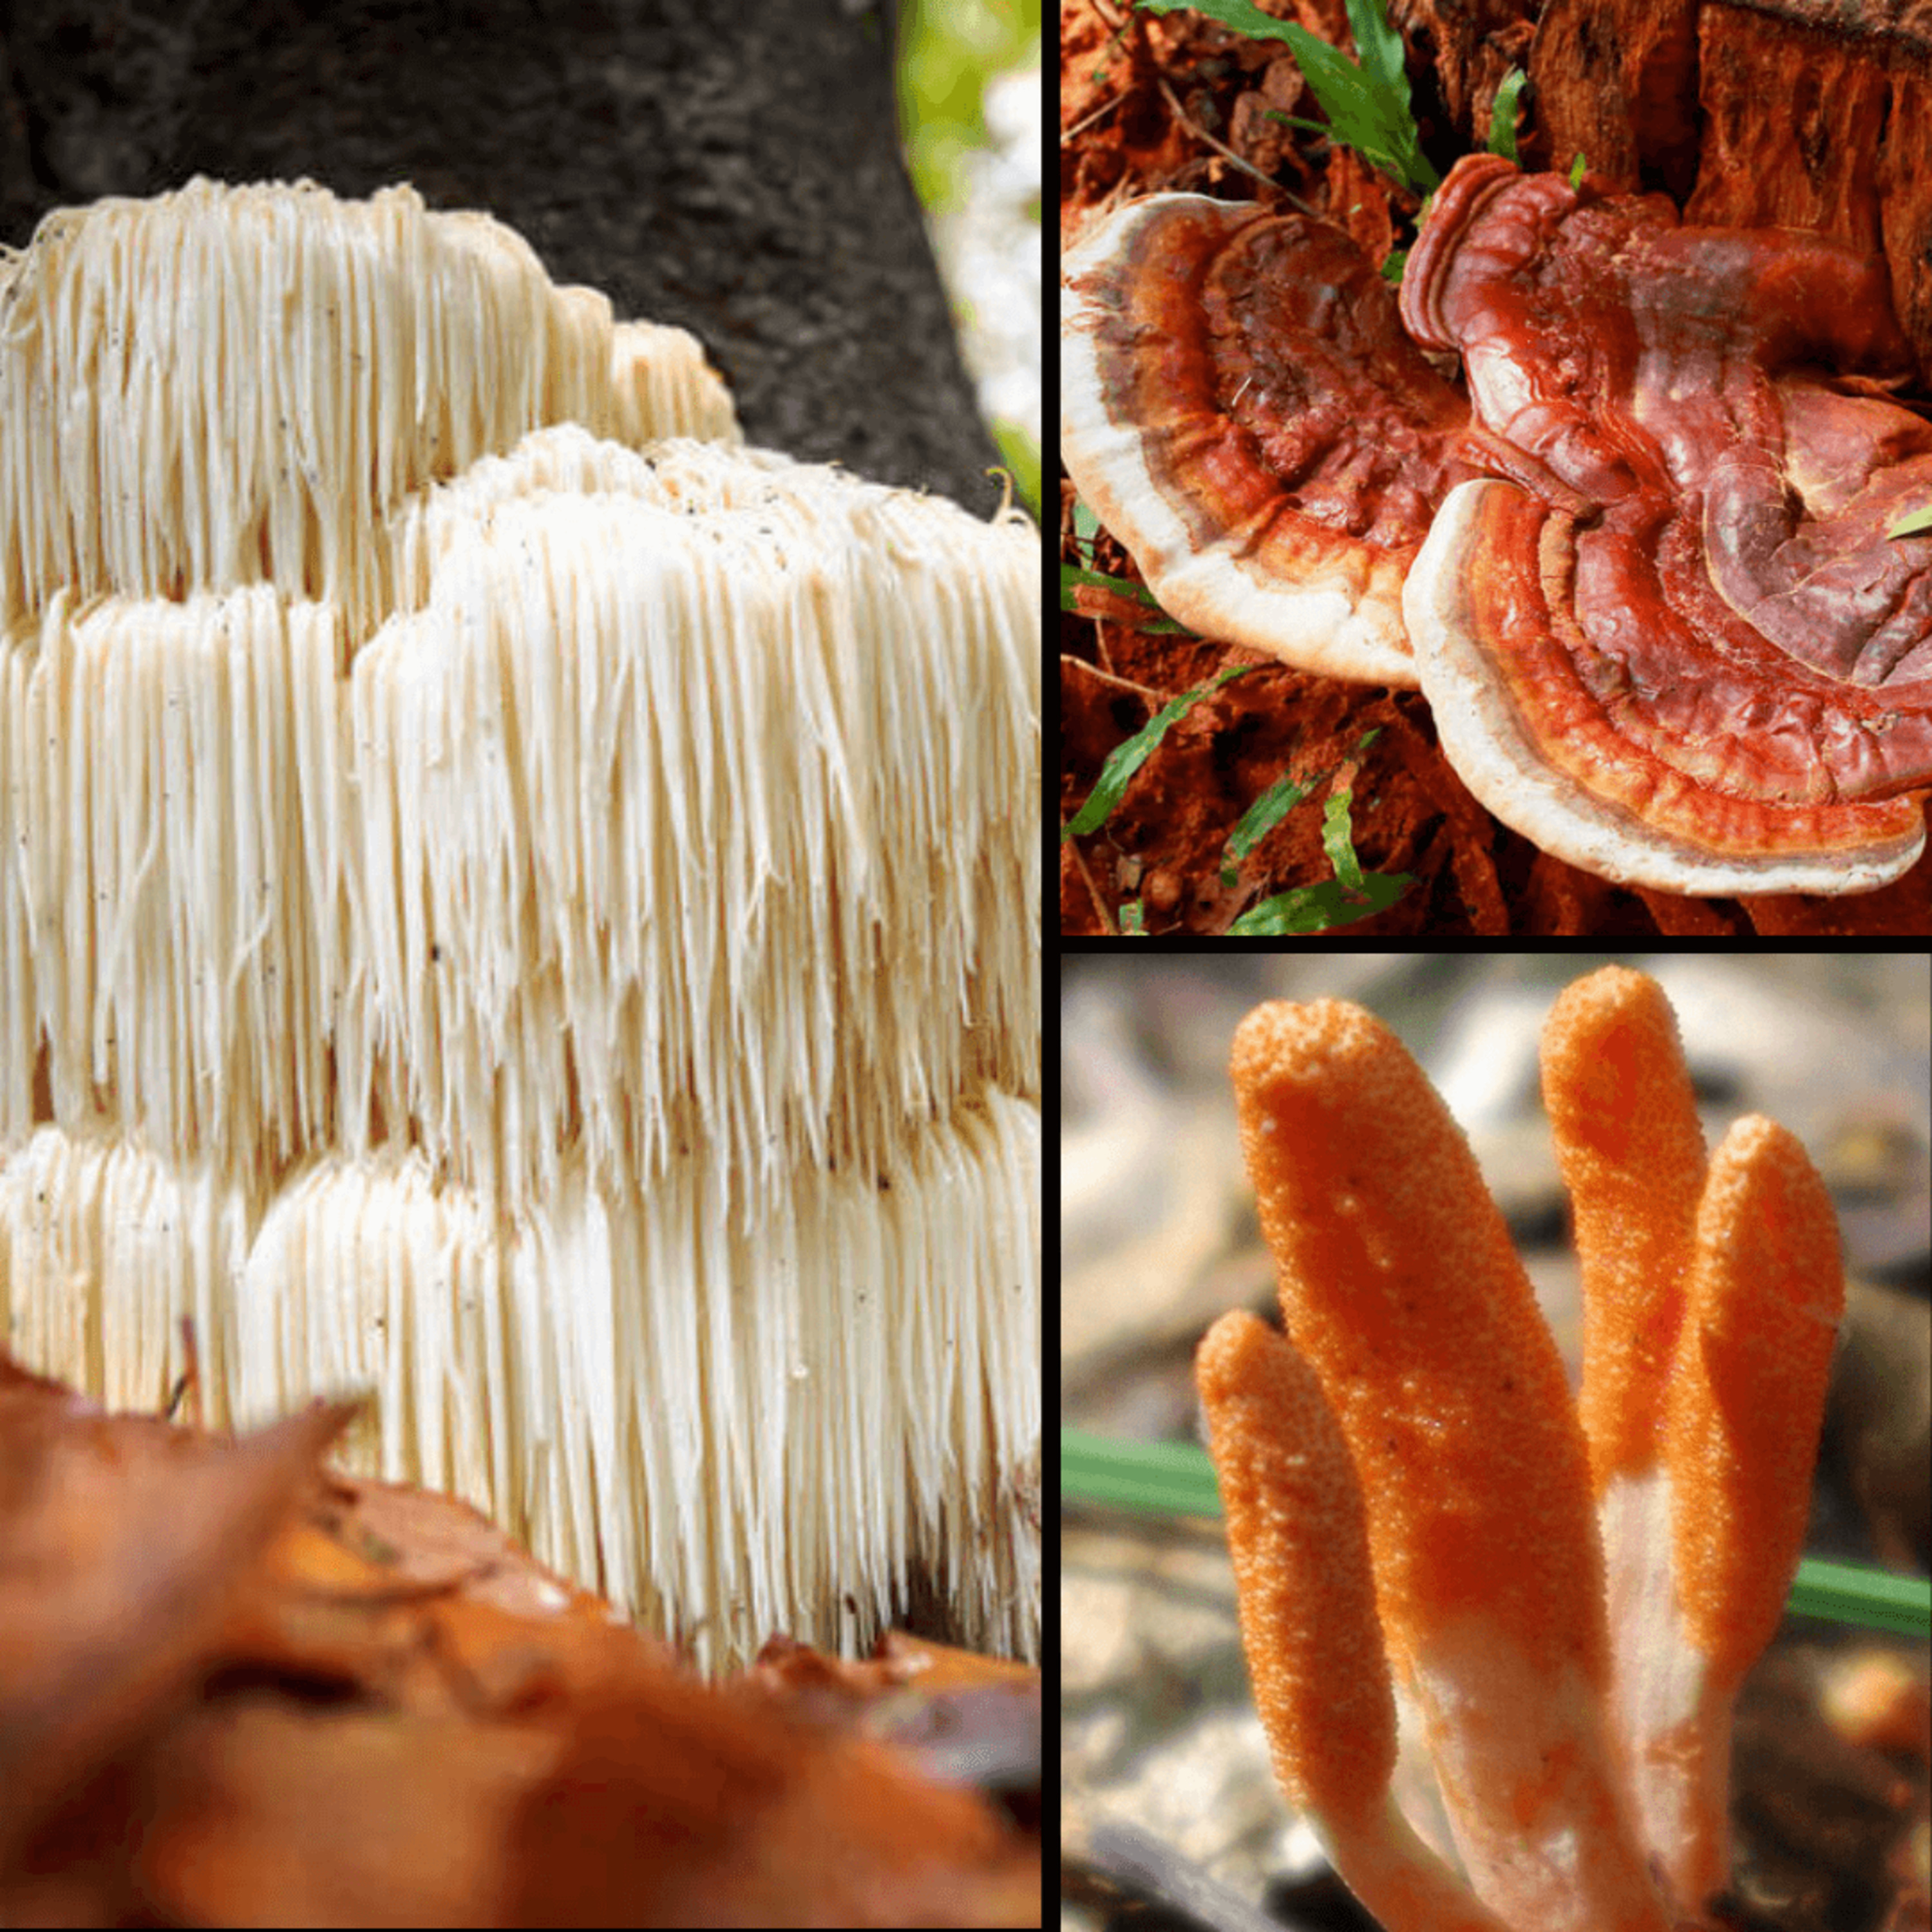 Top 3 Medicinal Mushroom to Boost Brain Function